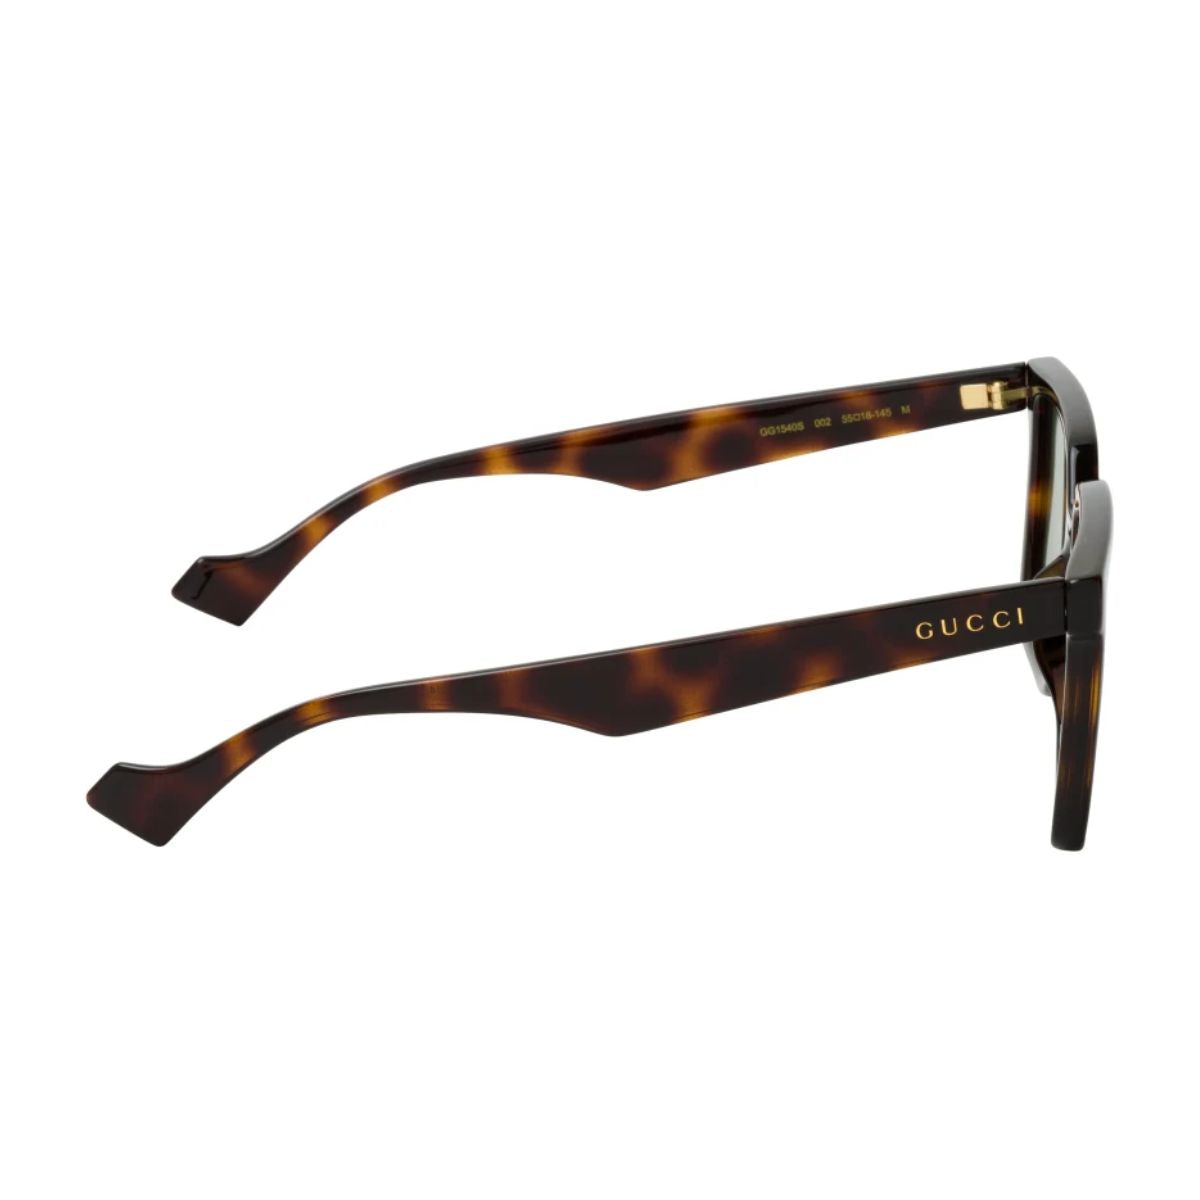 "Gucci Eyewear: Explore the Latest 1540S 002 Sunglasses for Men at Optorium"